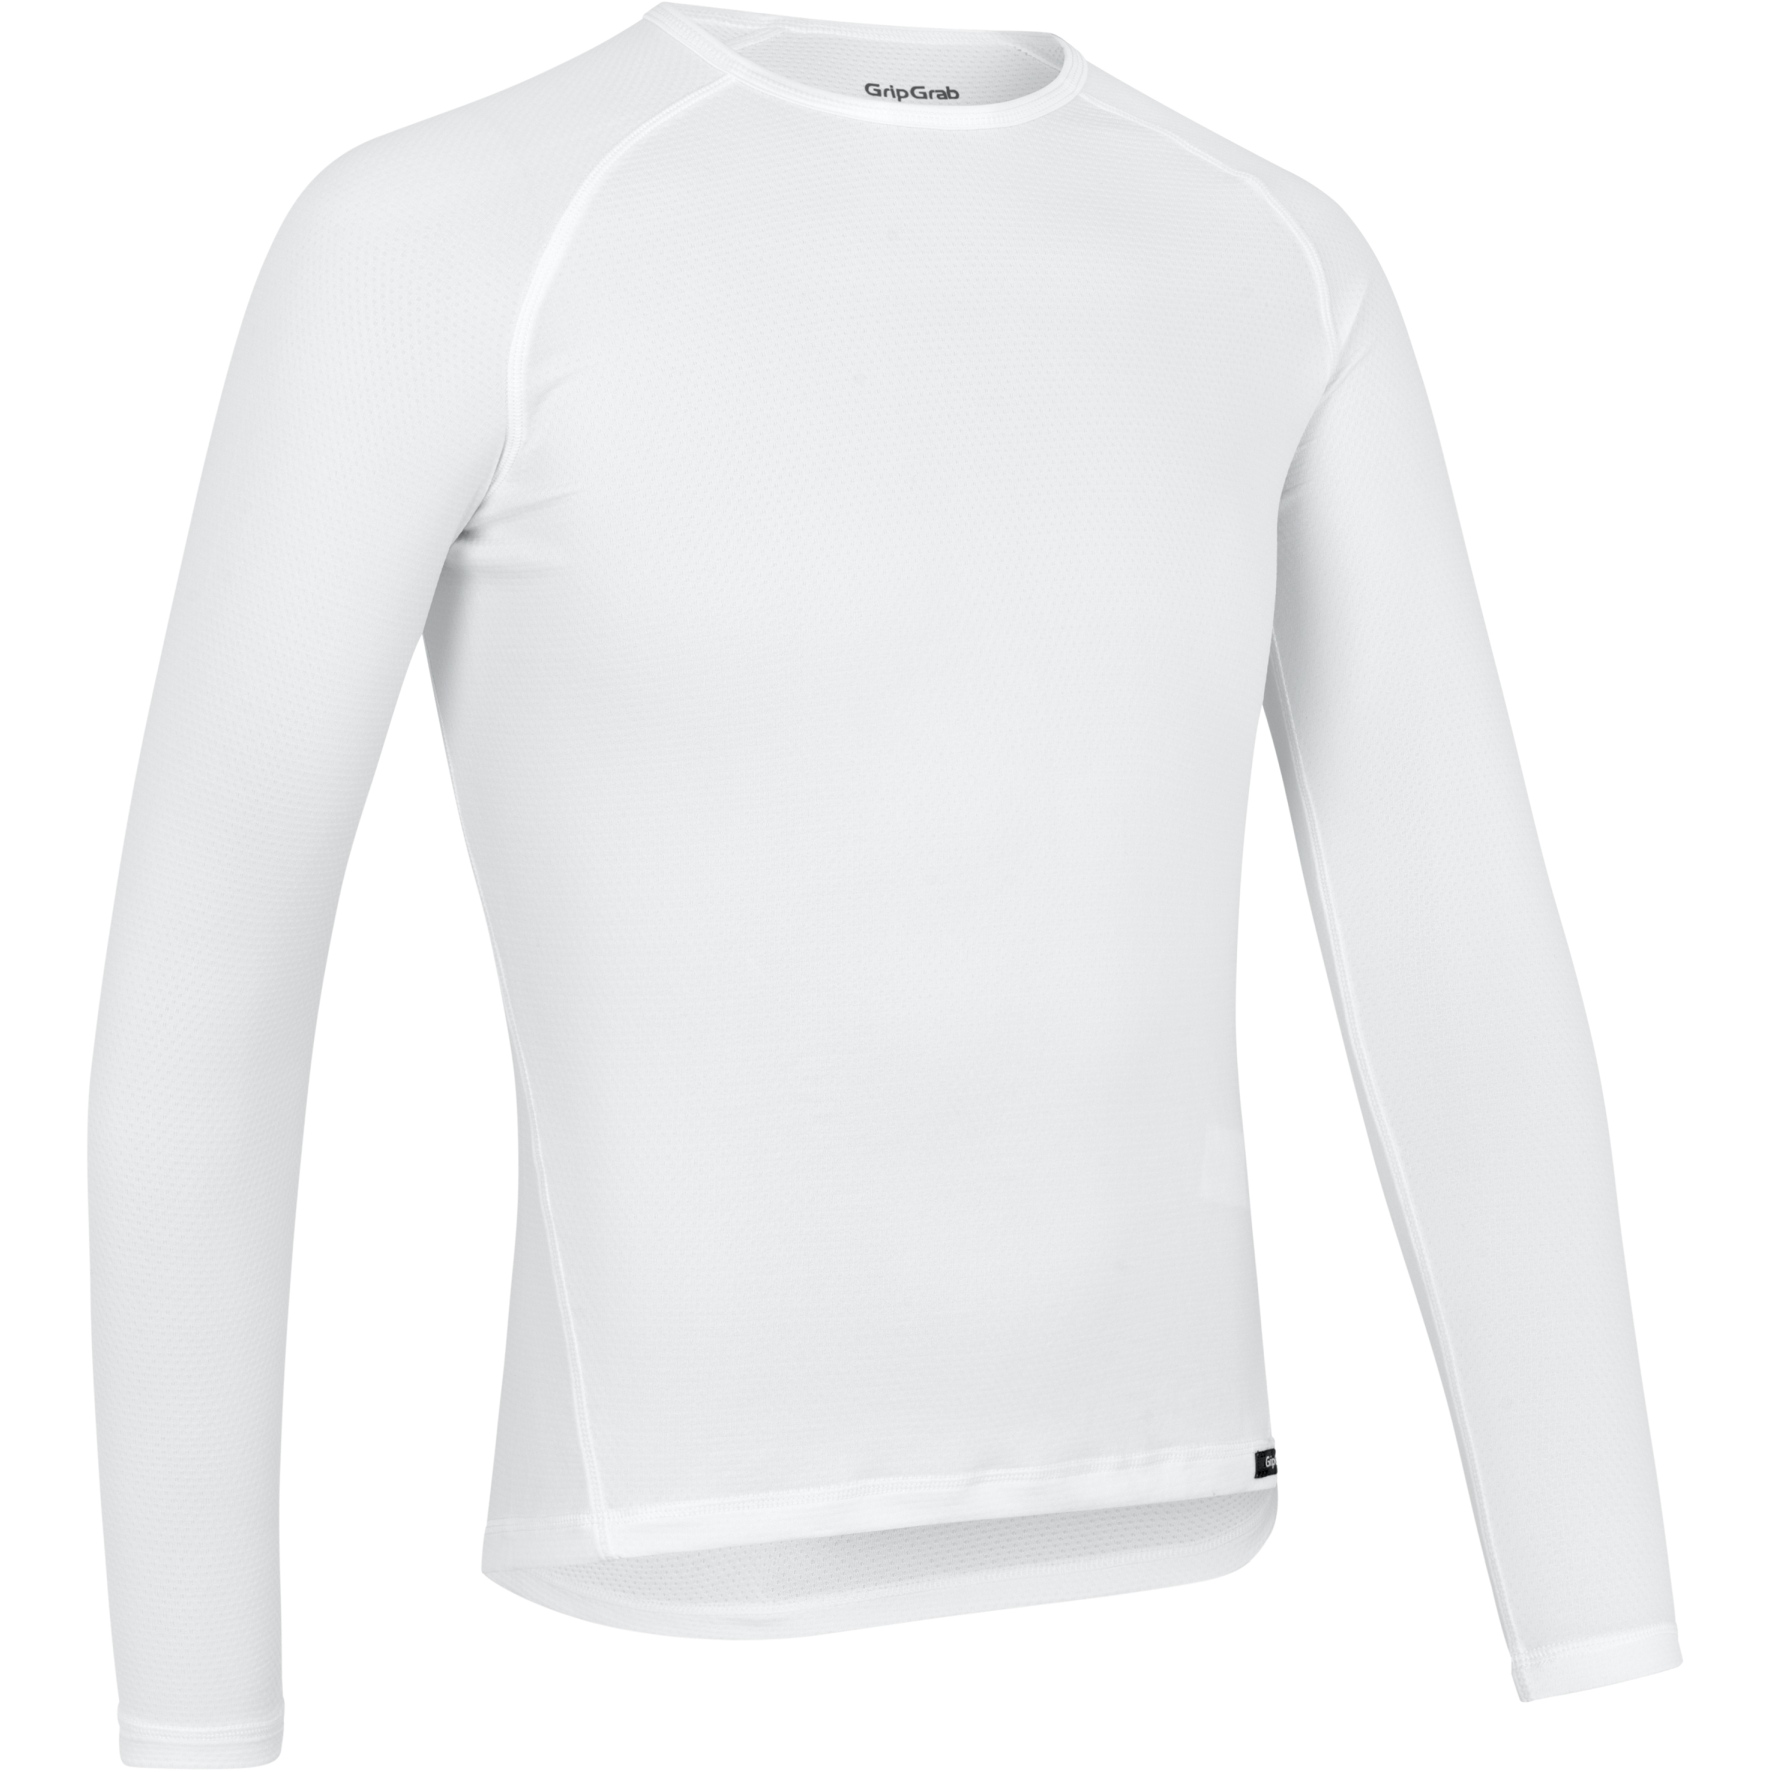 Productfoto van GripGrab Ride Thermal Vest met Lange Mouwen - White